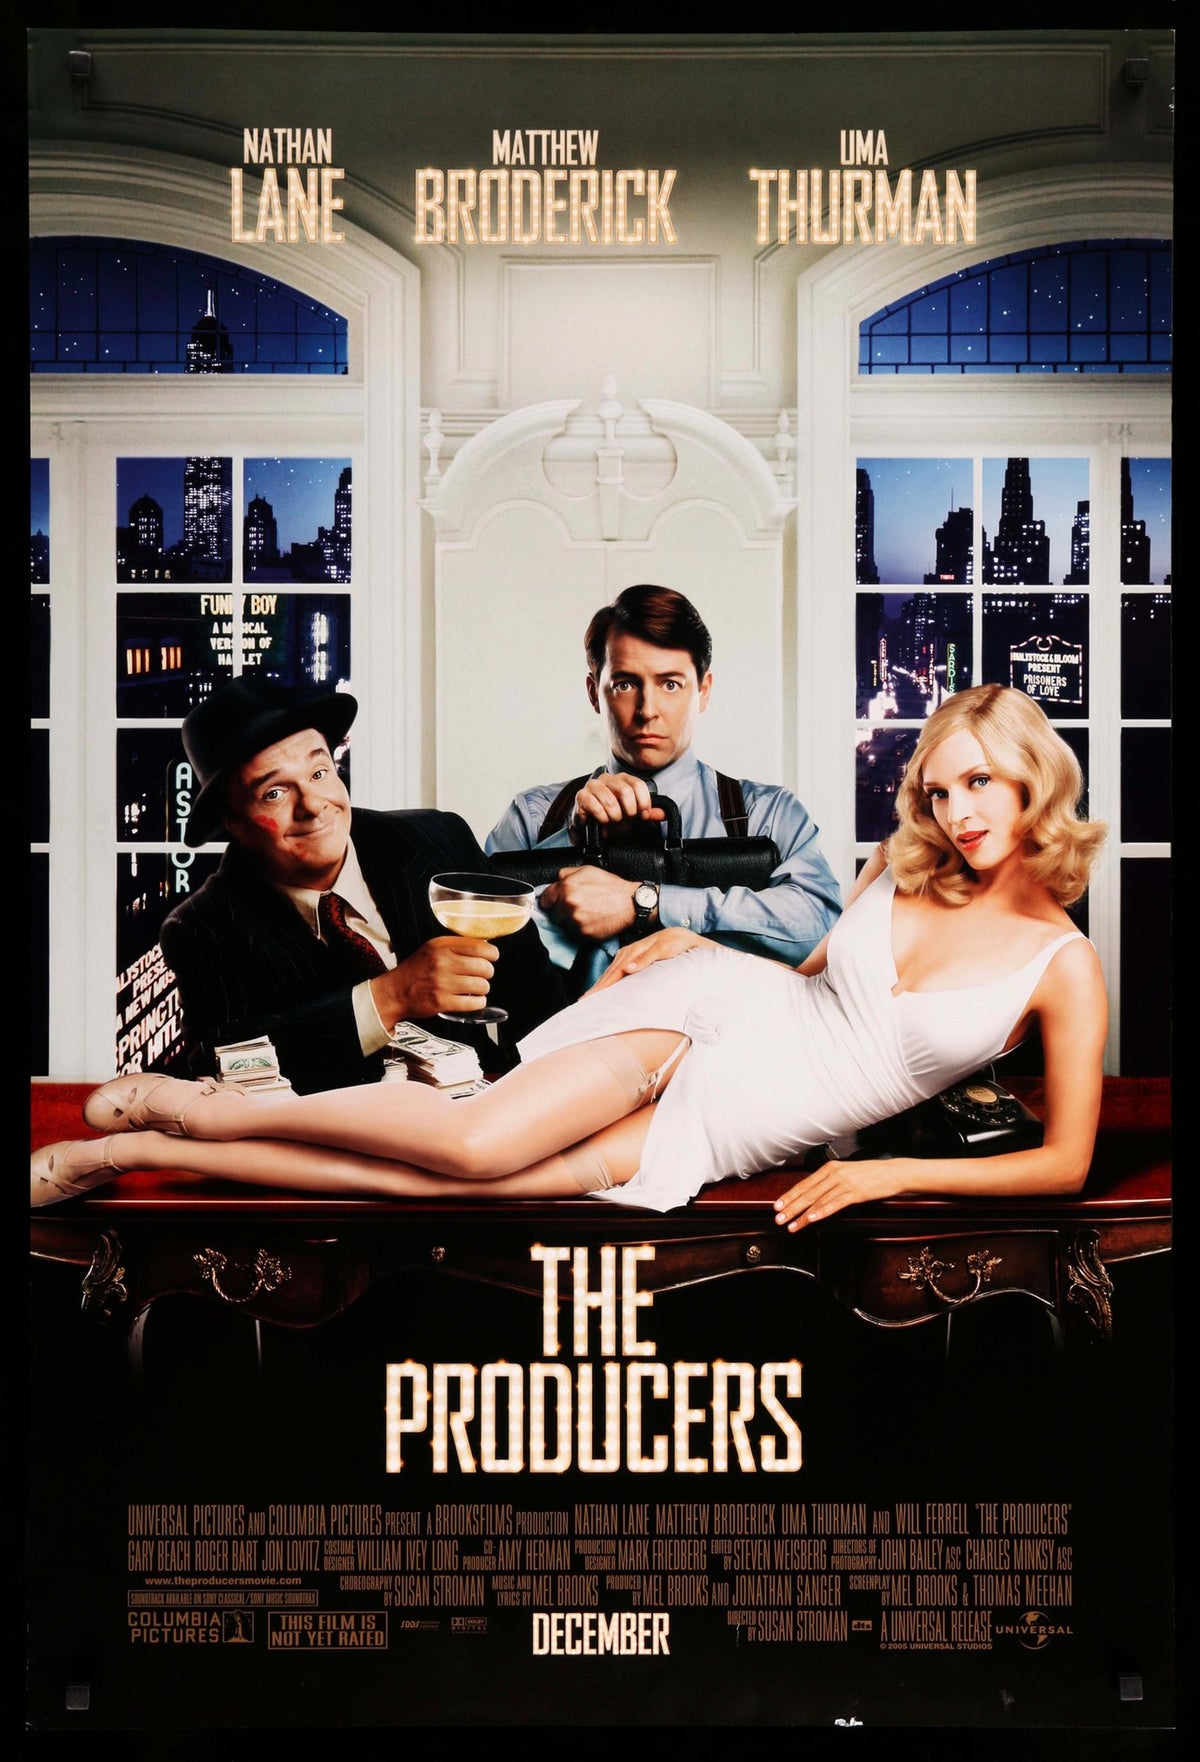 Producers (2005) original movie poster for sale at Original Film Art